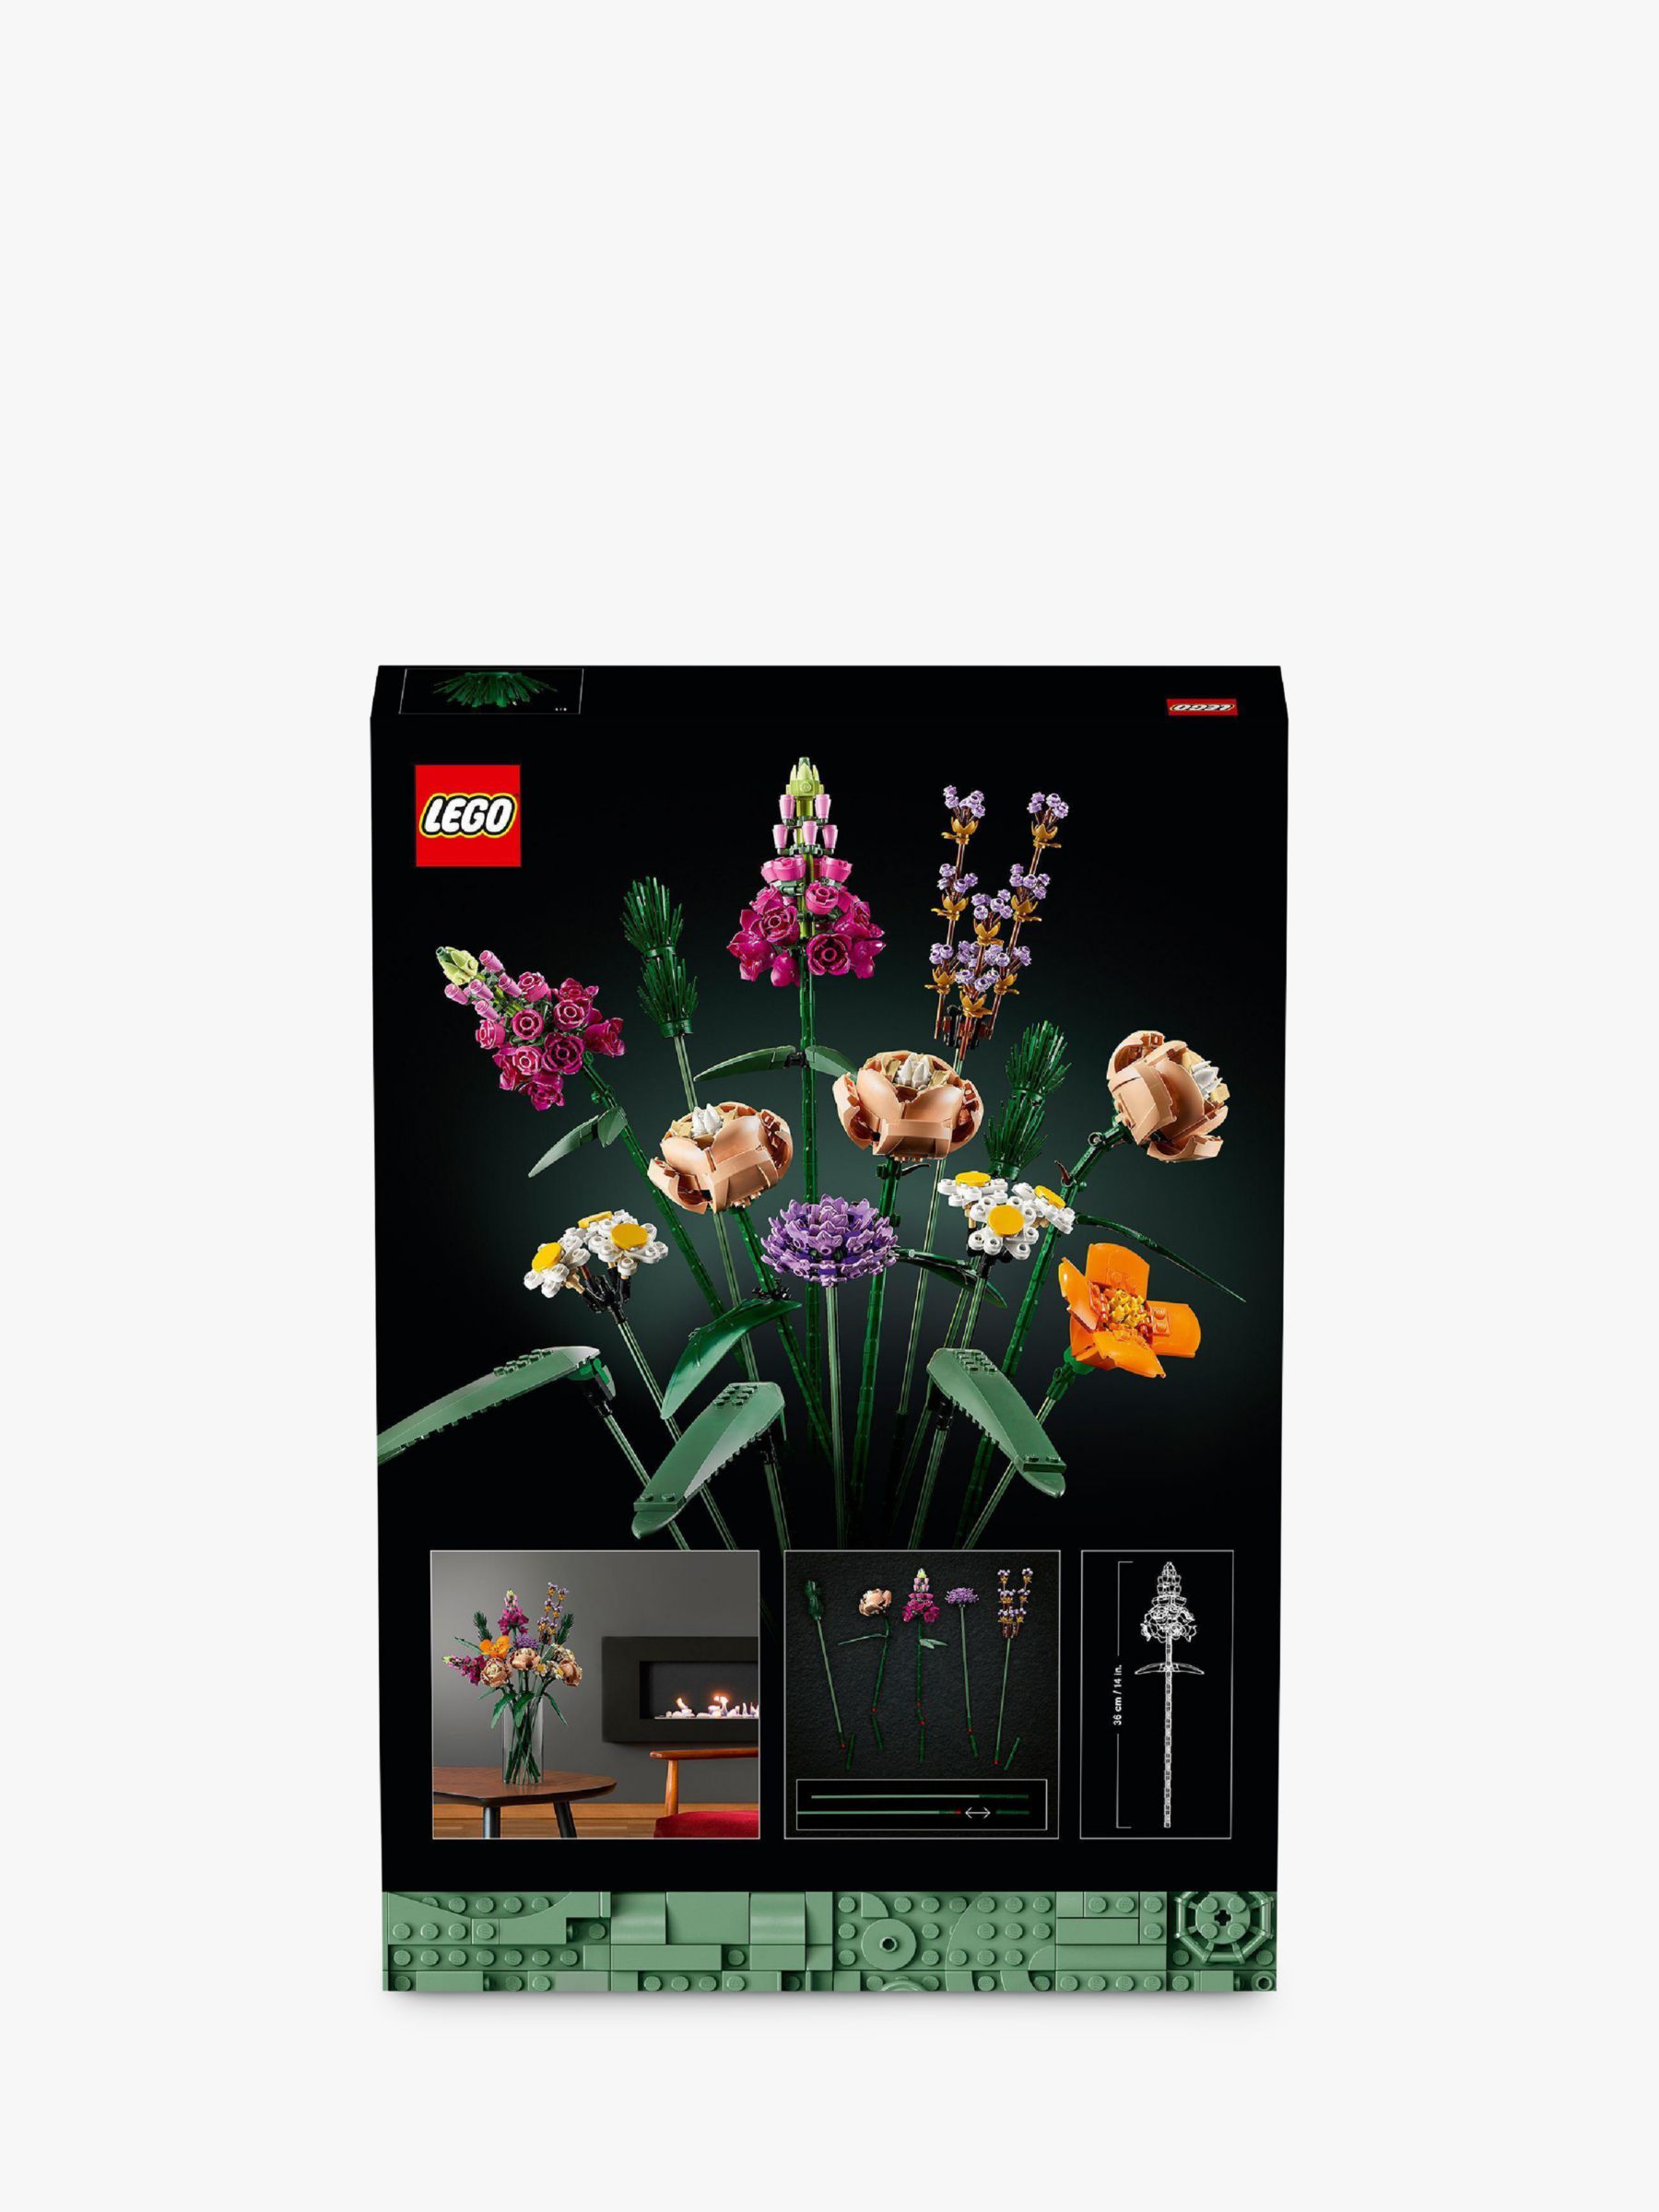 LEGO Icons 10280 Flower Bouquet